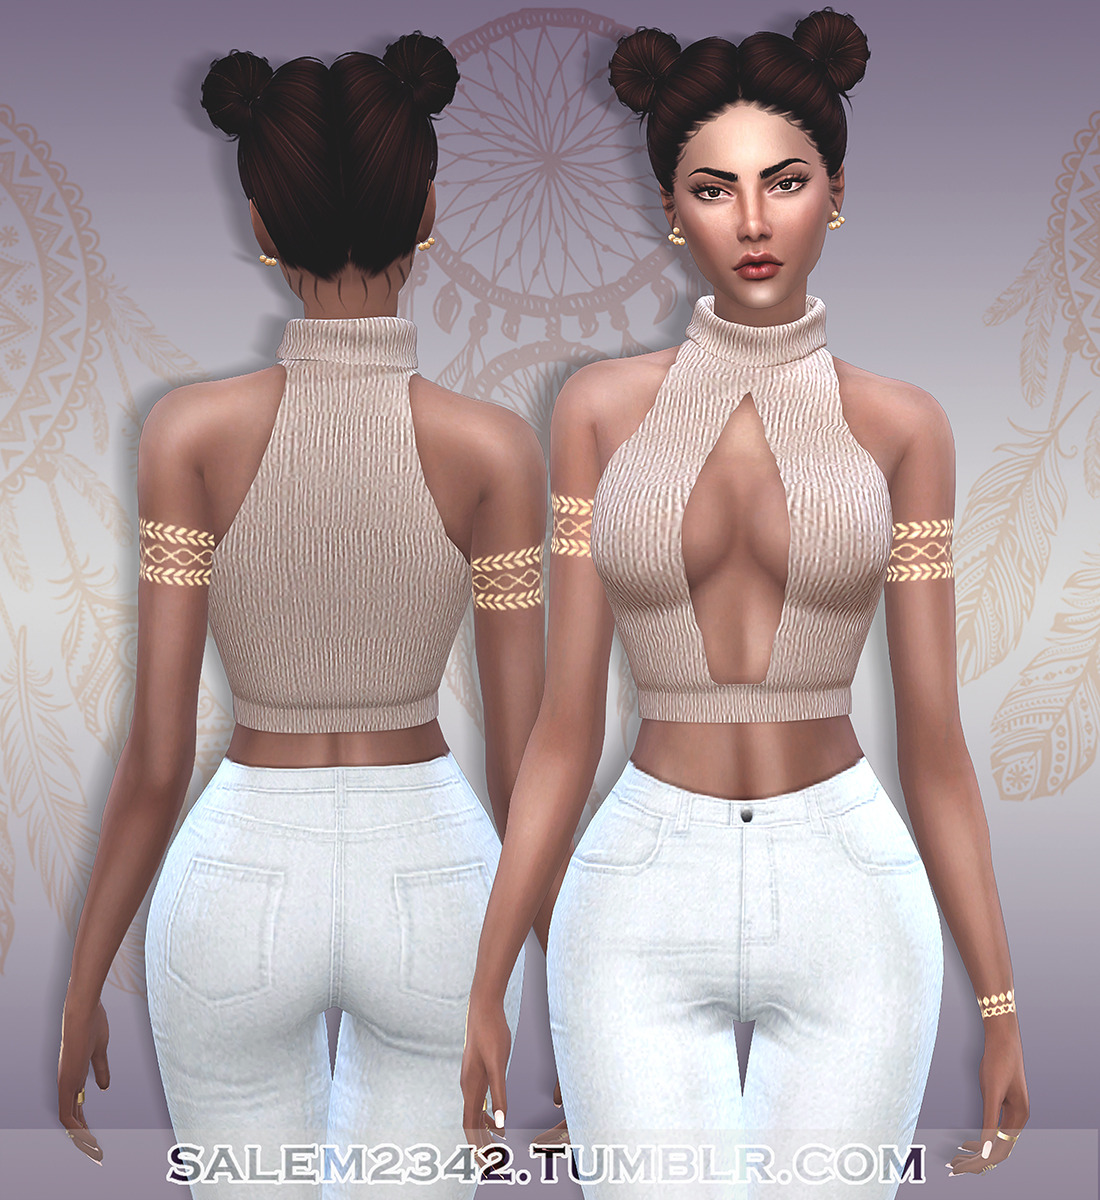  The Sims 4: Женская повседневная одежда  - Страница 12 Tumblr_o2w1p4azdL1tha3yxo1_1280